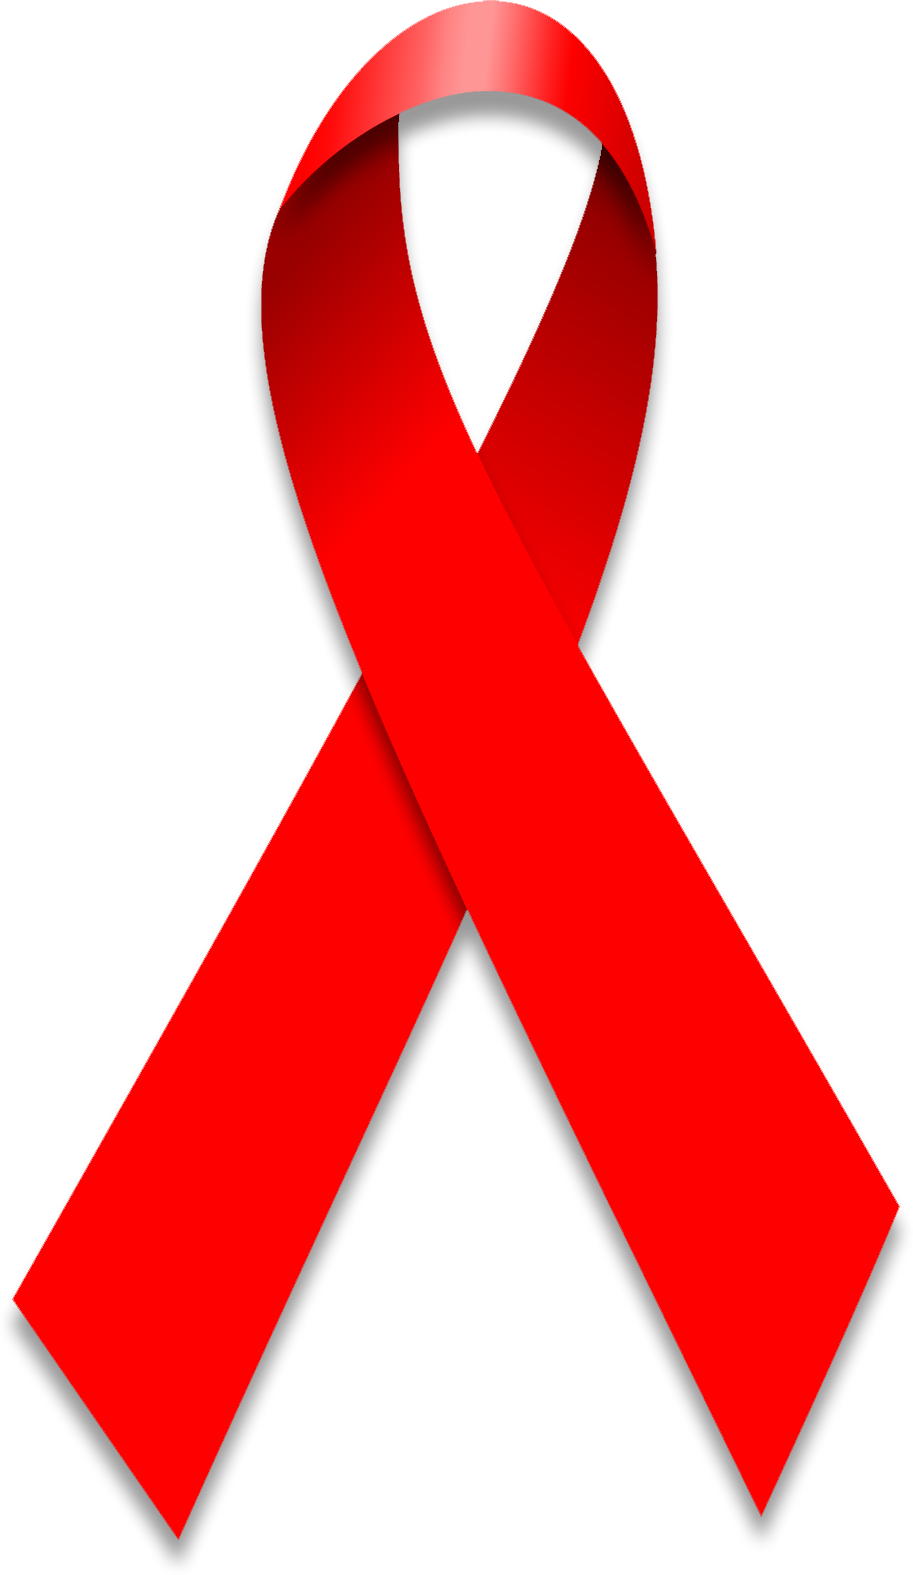 File:World Aids Day Ribbon.pn